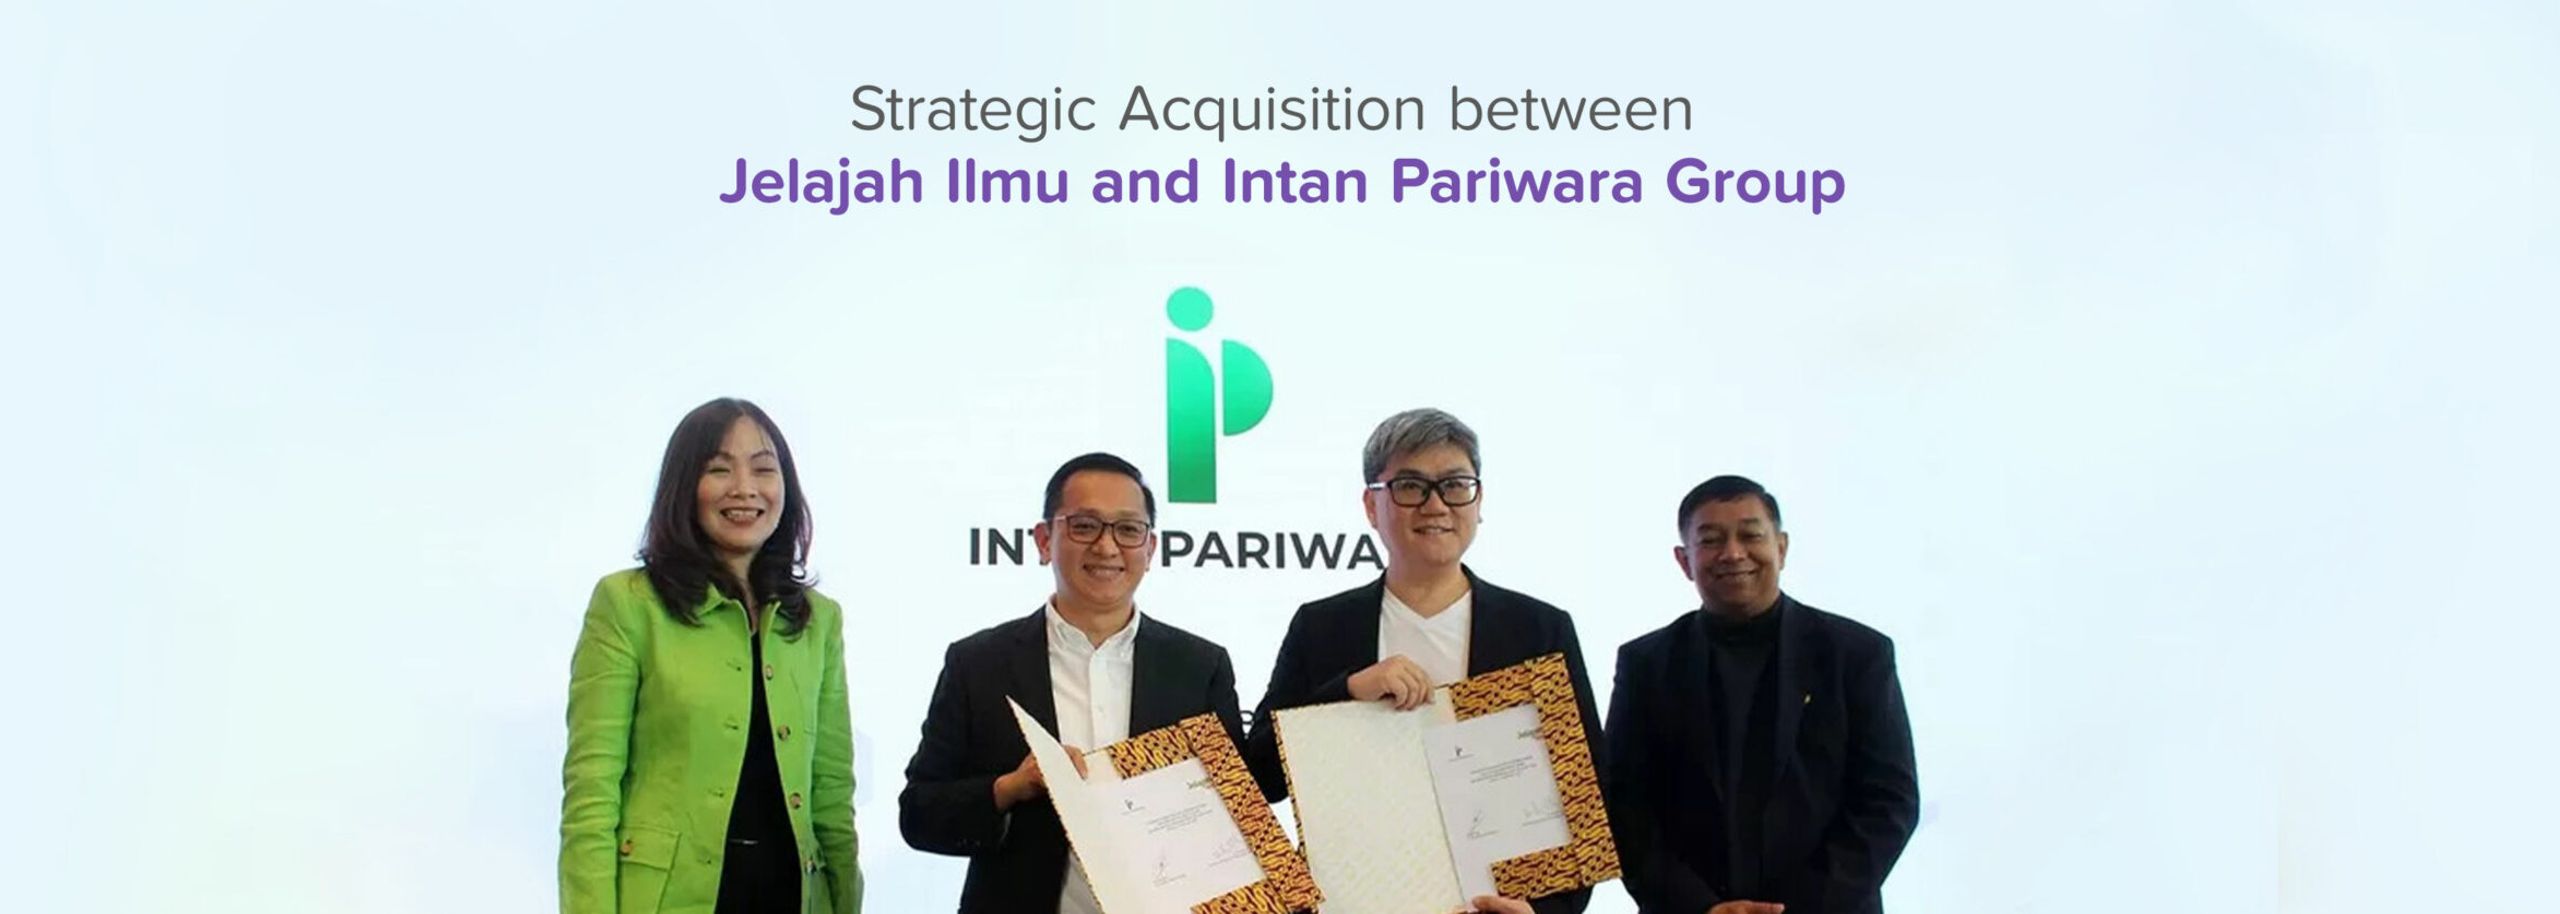 Intan Pariwara Group Announces Strategic Acquisition of mySecondTeacher’s “Jelajah Ilmu”